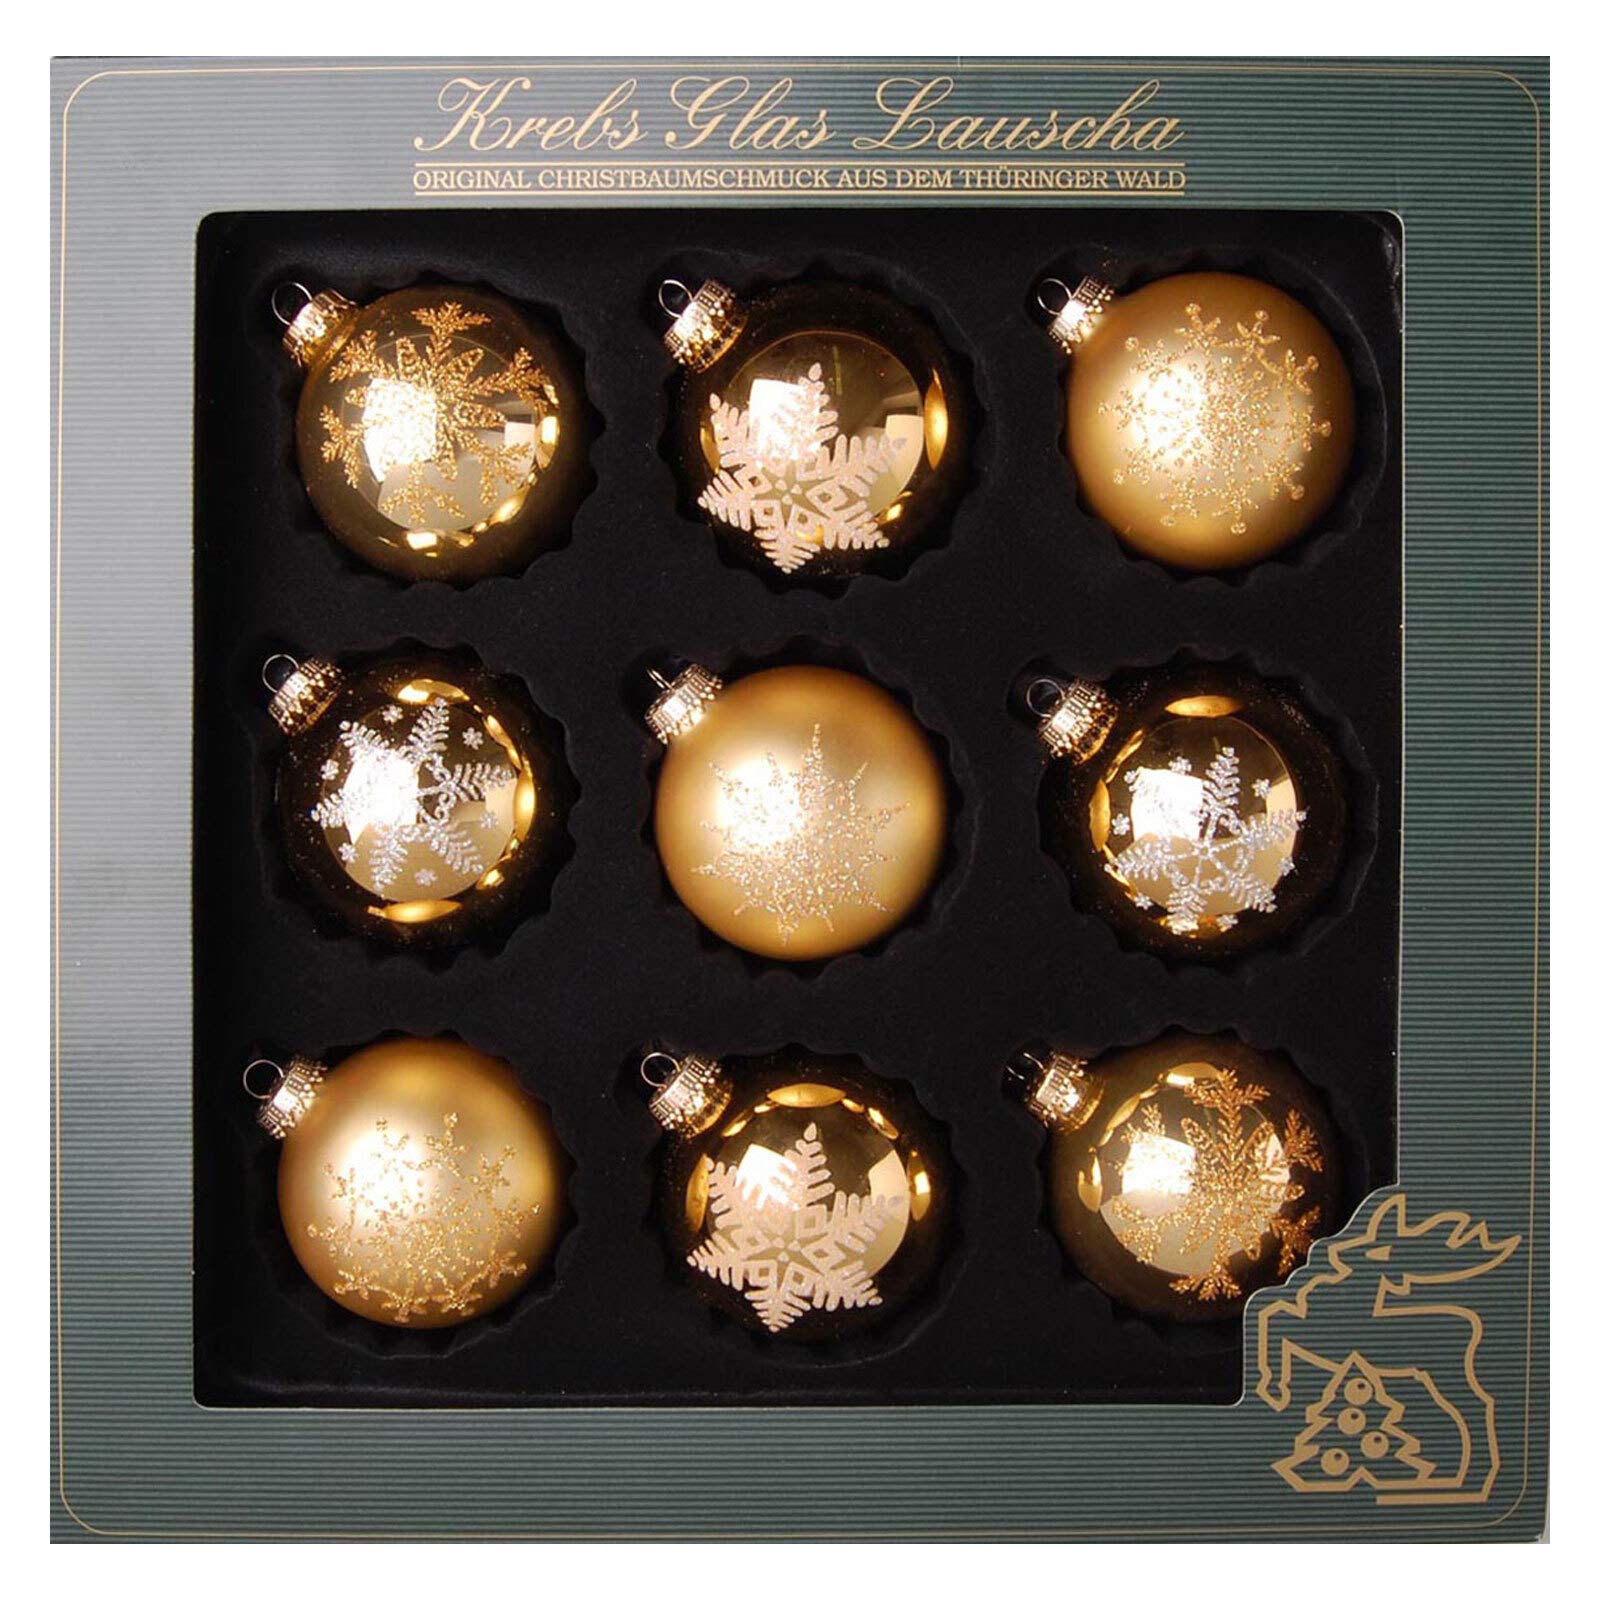 Gold/Satin-Gold, Glaskugelsortiment 8cm, handdekoriert, 9 Stk./Box